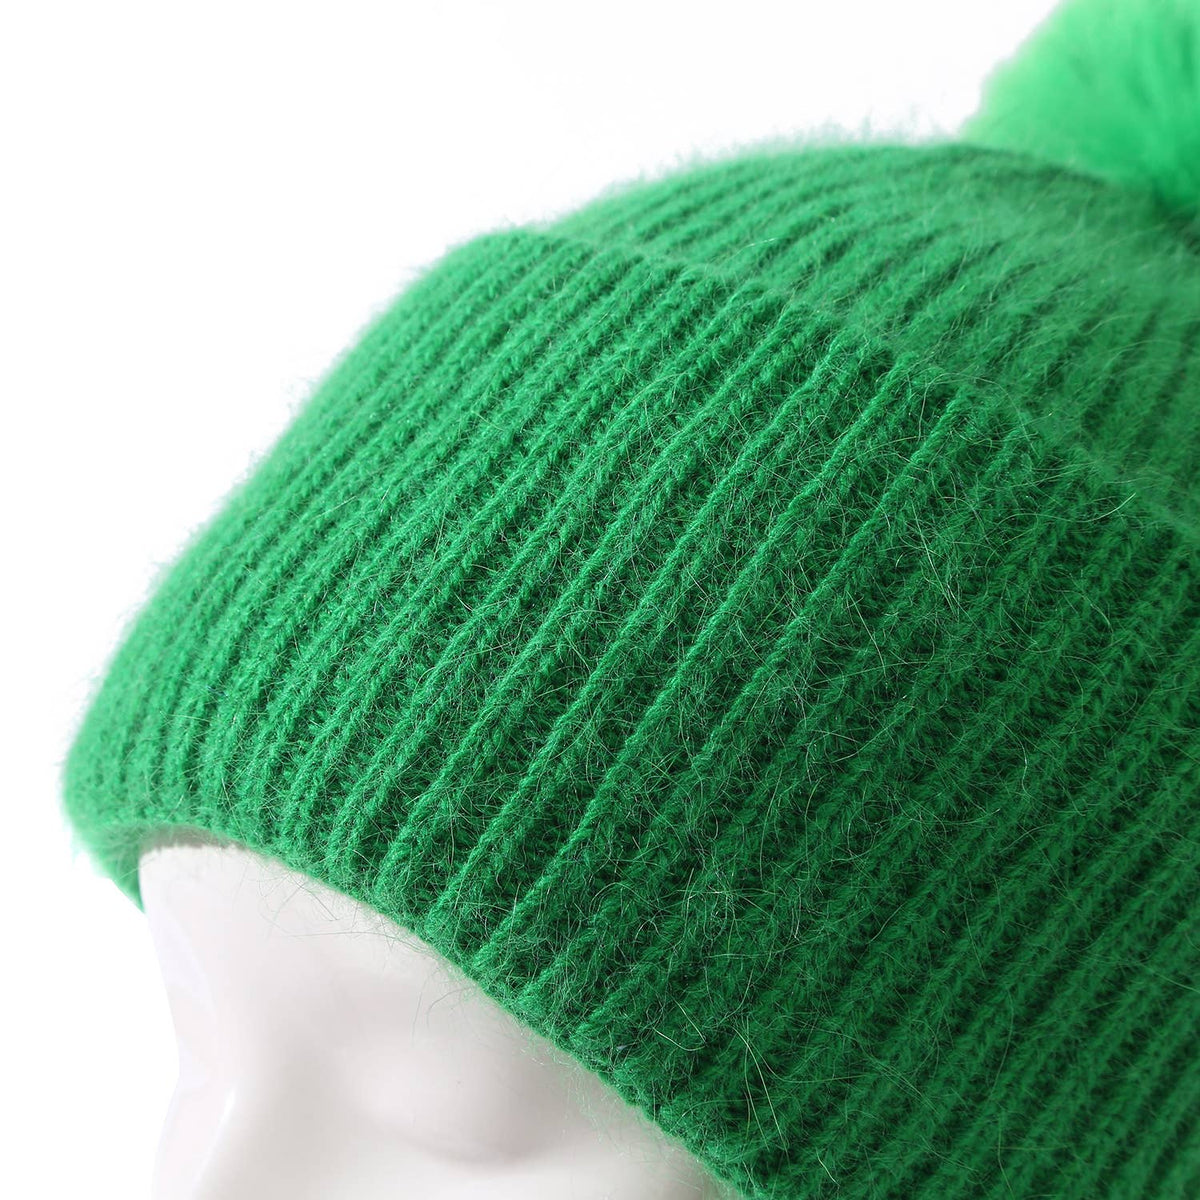 PEACH ACCESSORIES - SD102 Plain wool hat: Light Green